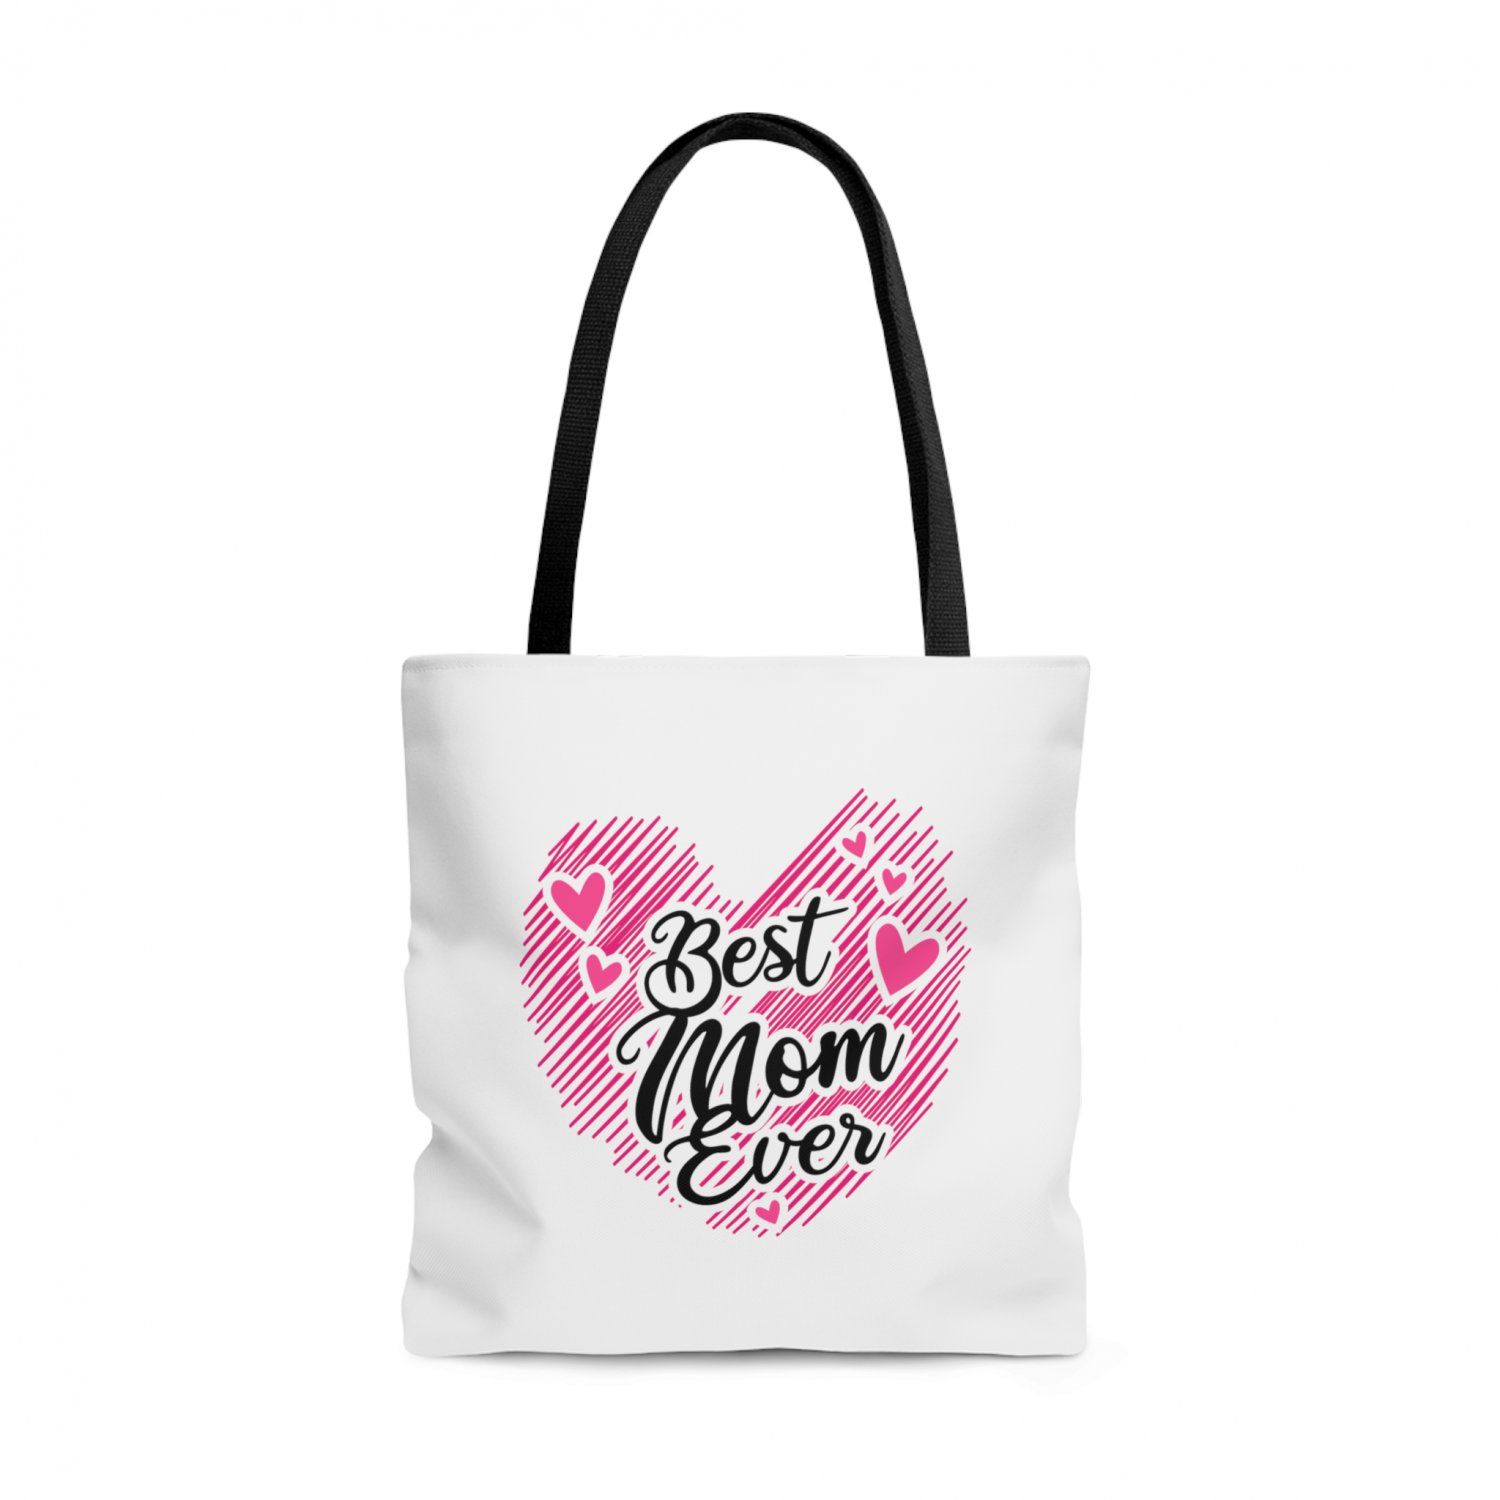 Best Mom Ever Tote Bag Large